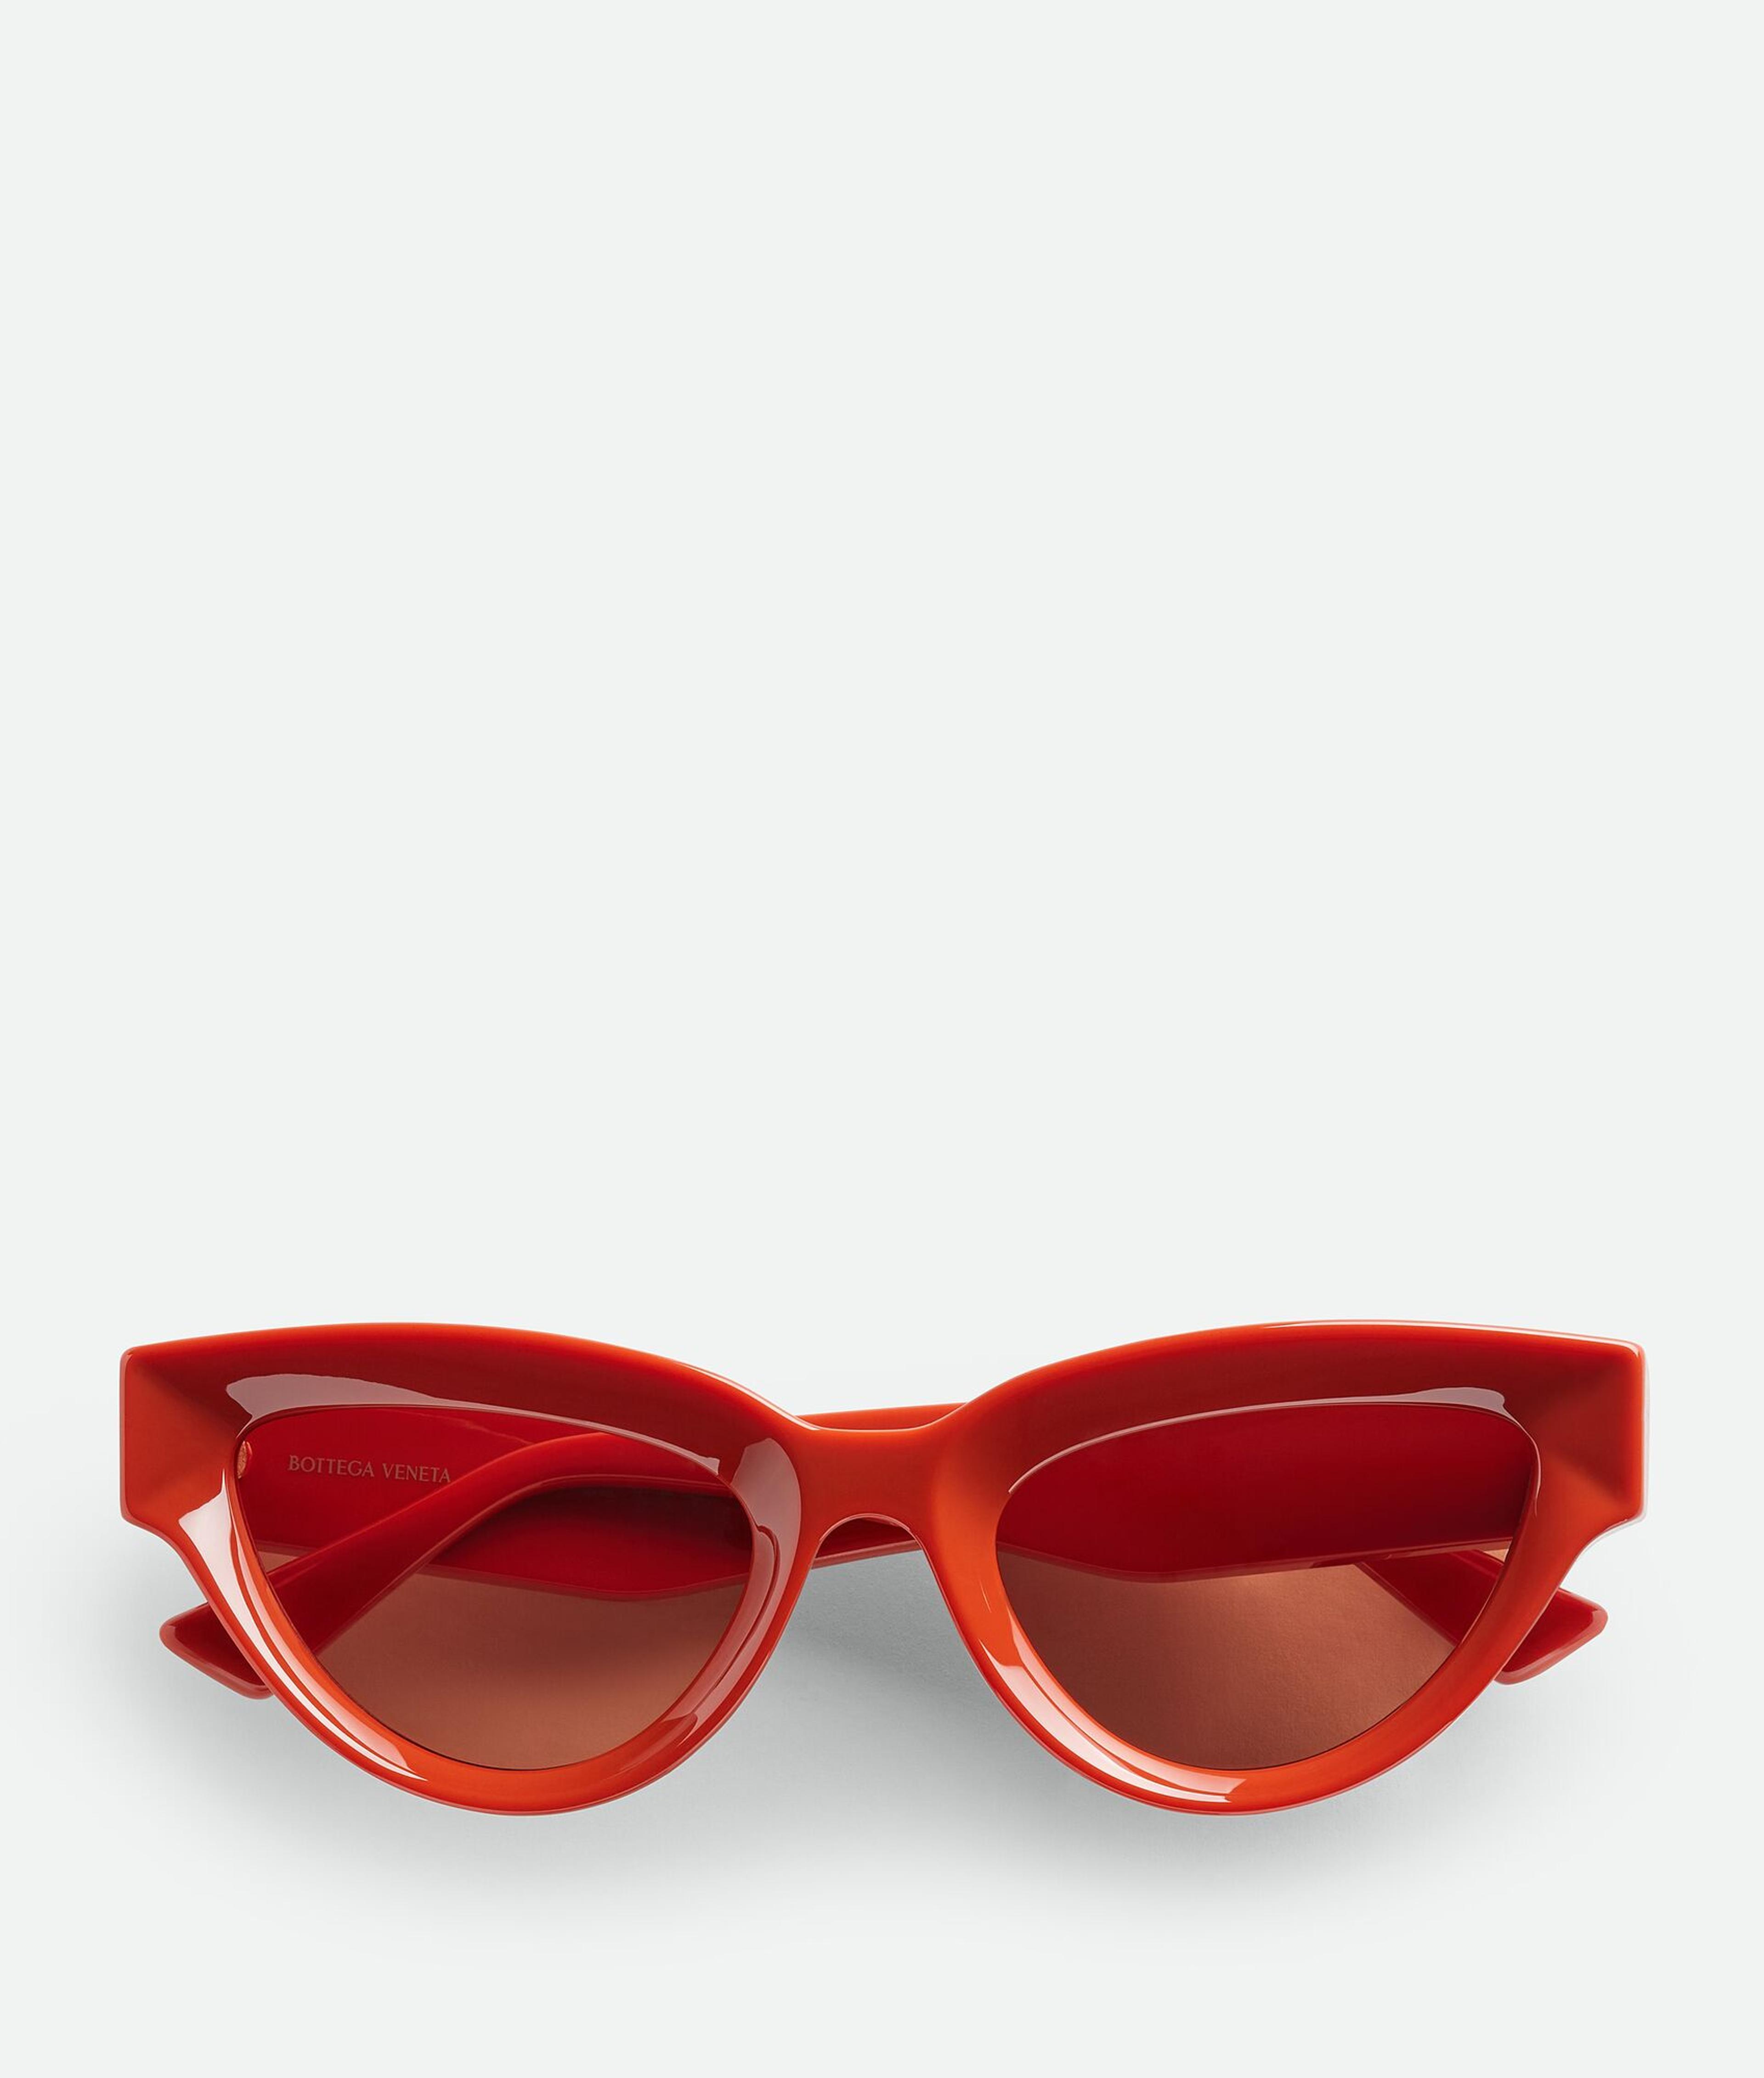 Bottega Veneta® Women's Sharp Cat Eye Sunglasses in Orange / Brown. Shop online now.